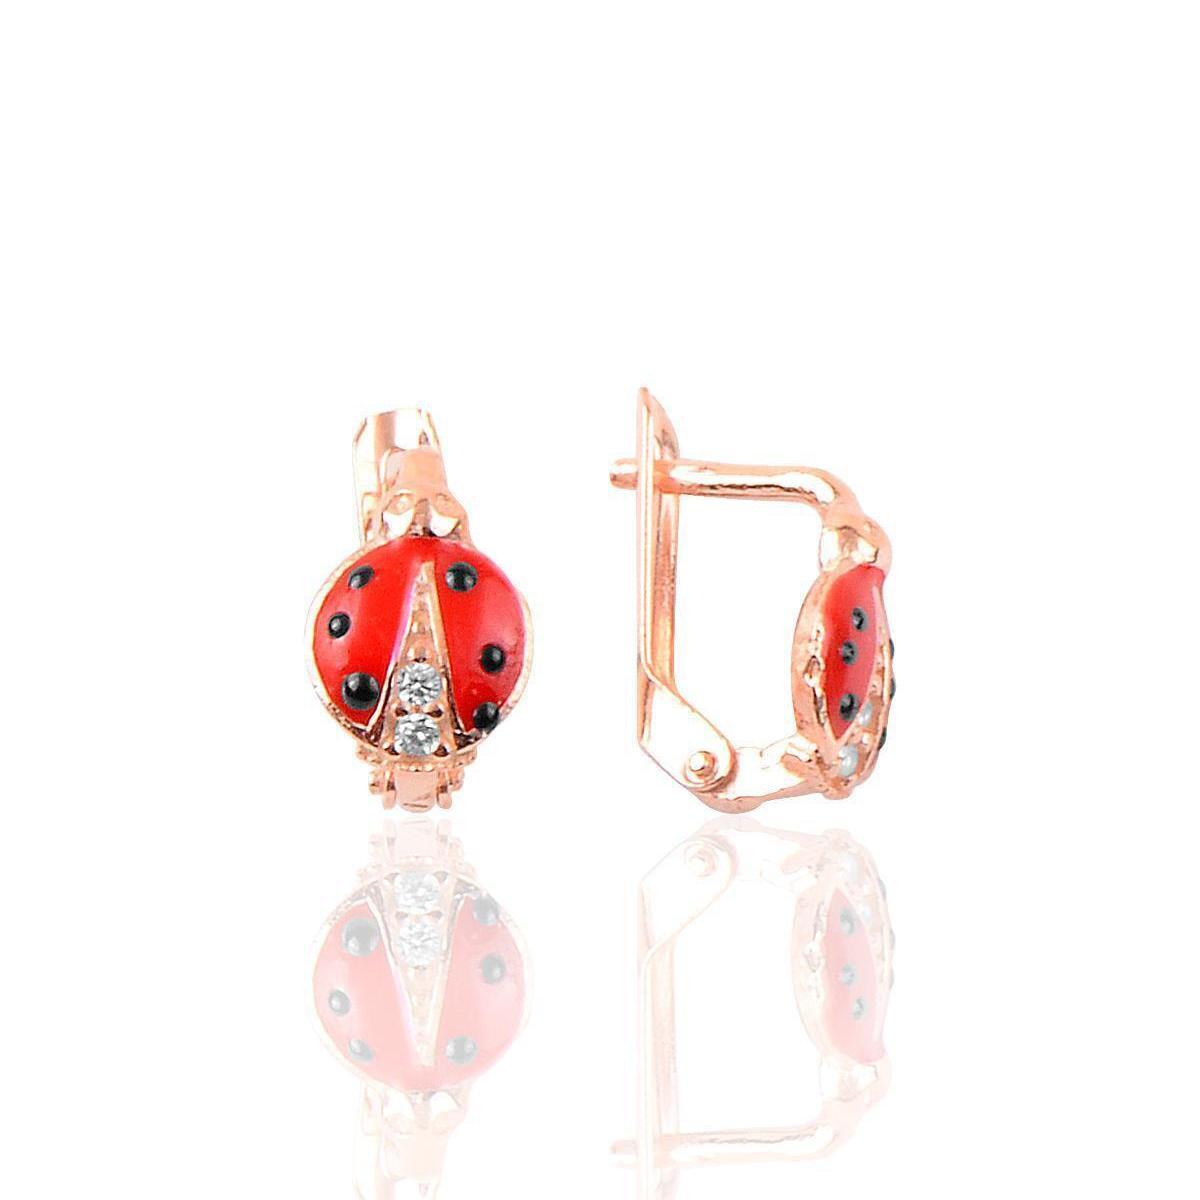 Ladybug Earrings Australia • Ladybug Clip On Earrings • Gift For Her - Trending Silver Gifts